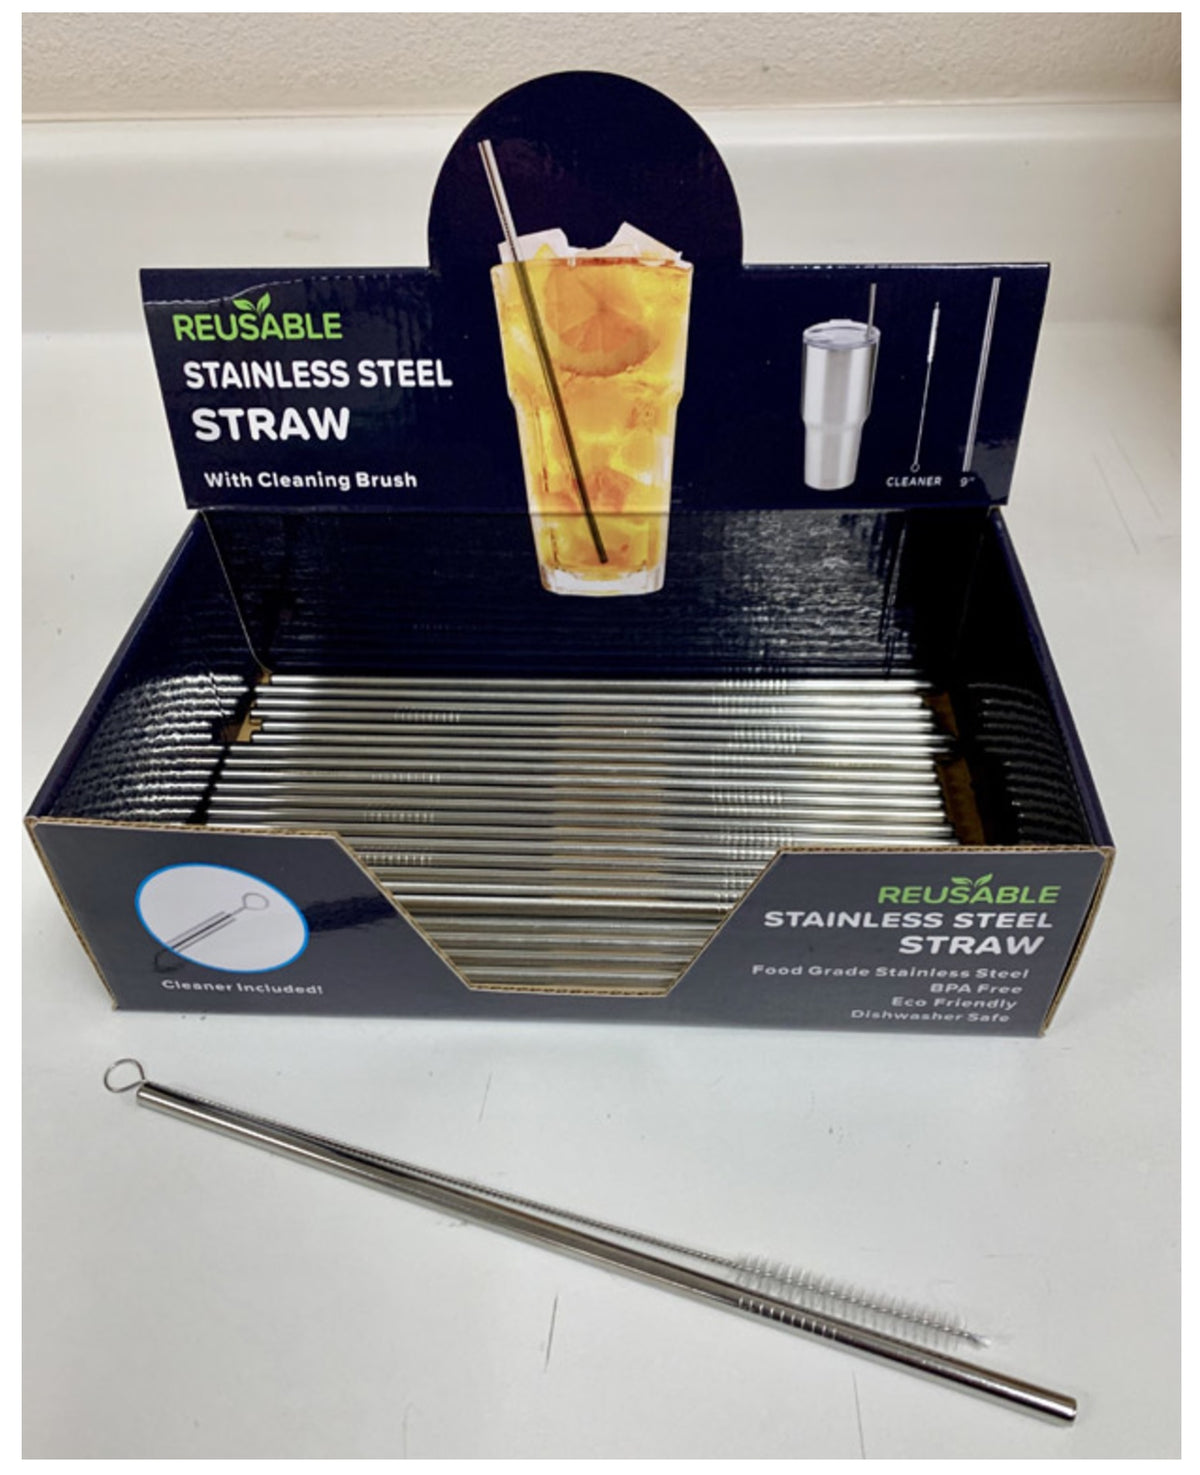 Hitt HE0152 Stainless Steel Straw & Cleaning Brush, Silver